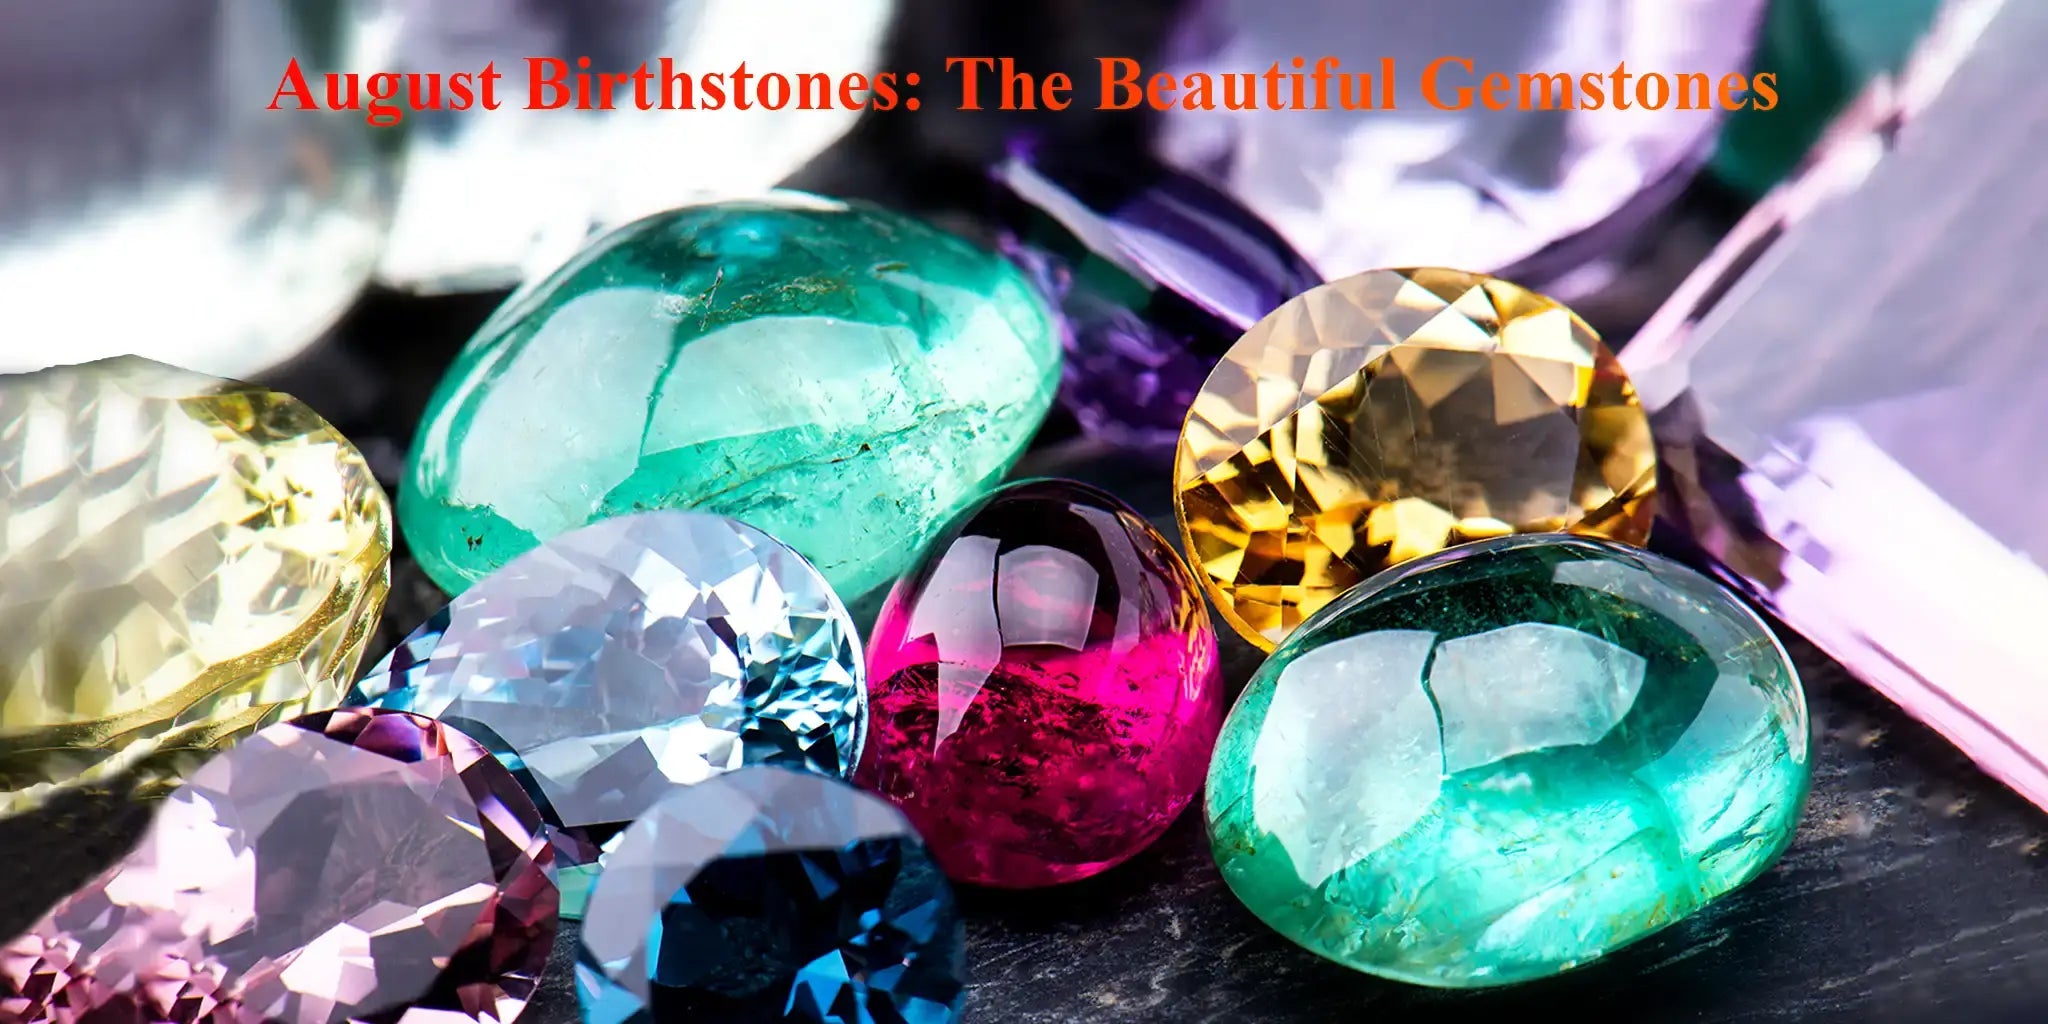 Birthstone, Gemstones, All Birthstones Are Available, Precious Semi  Precious Loose Gemstone, All Birthstone 